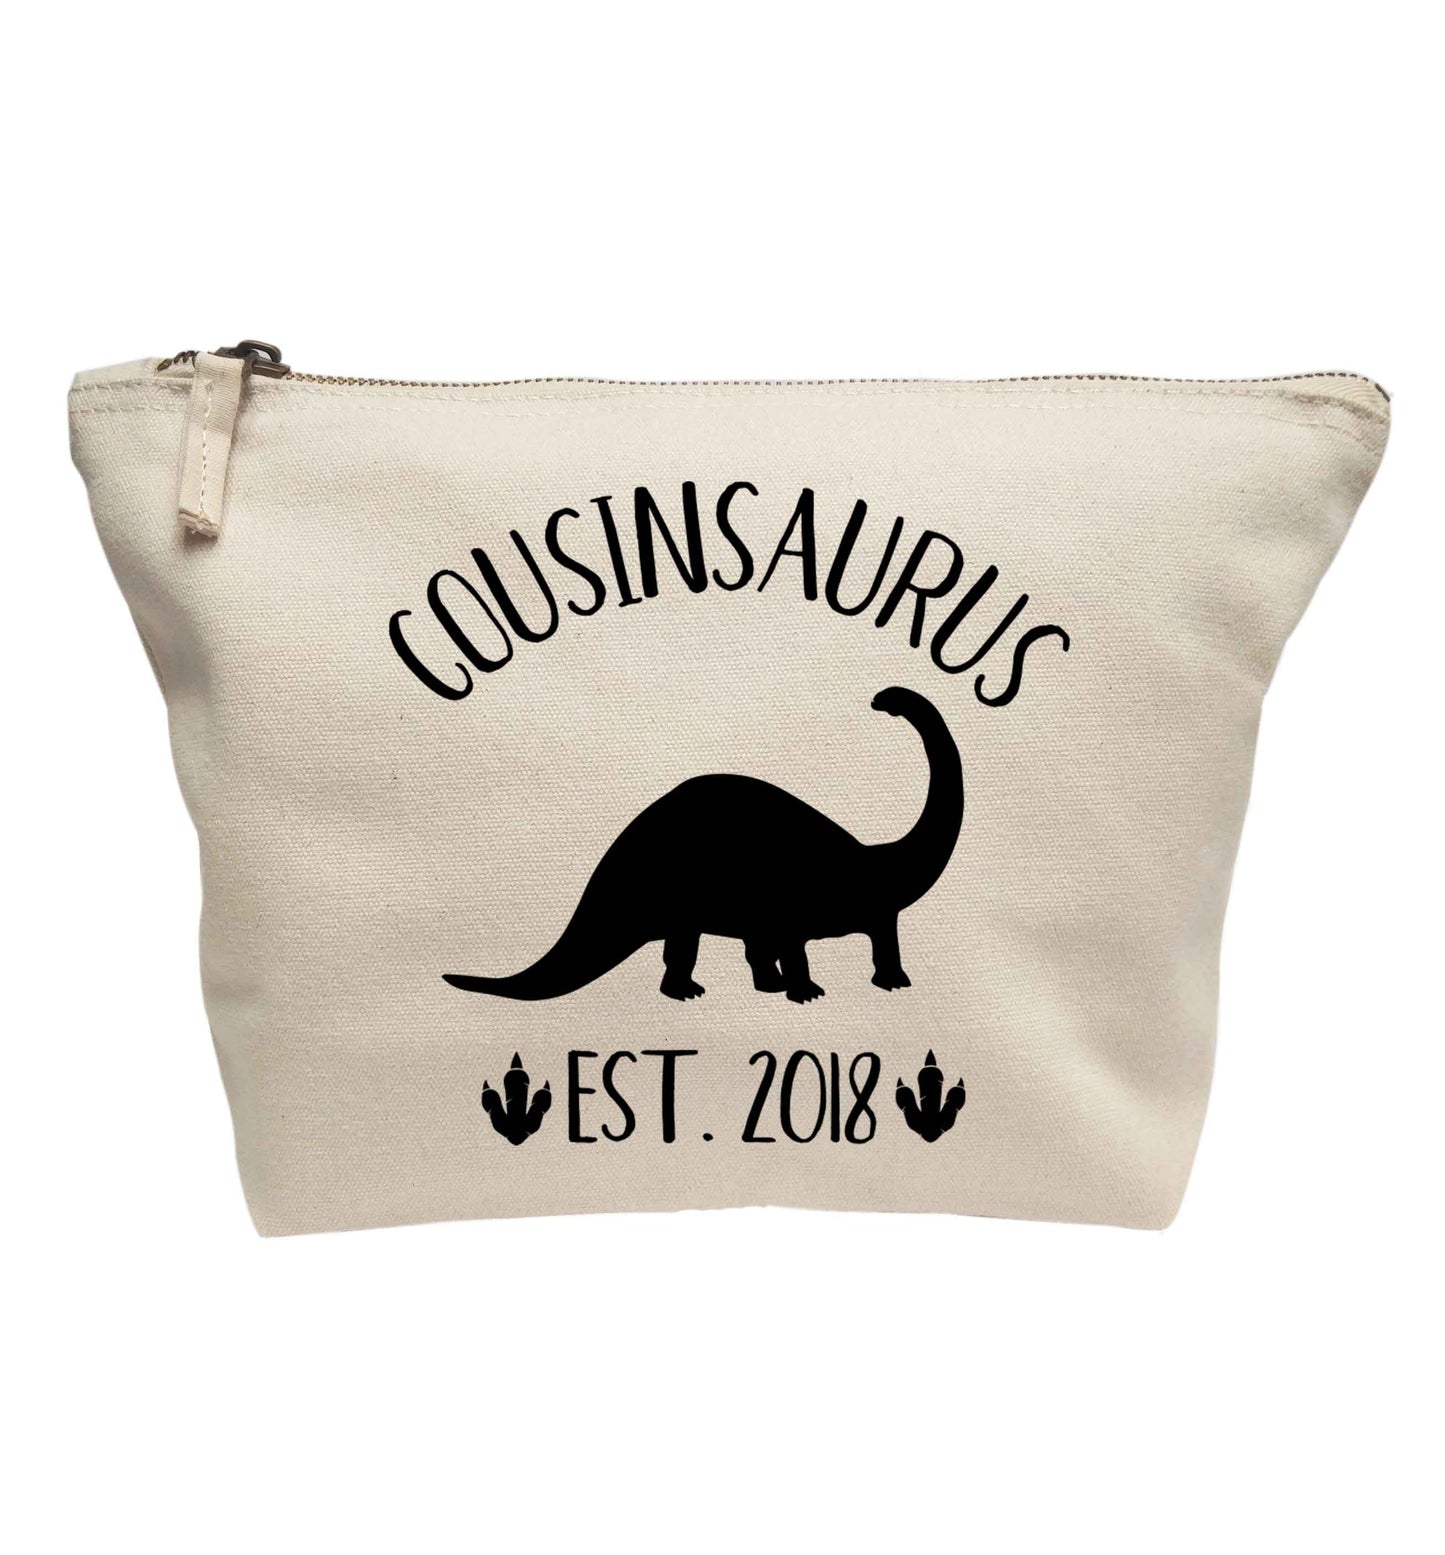 Personalised cousinsaurus since (custom date) | makeup / wash bag